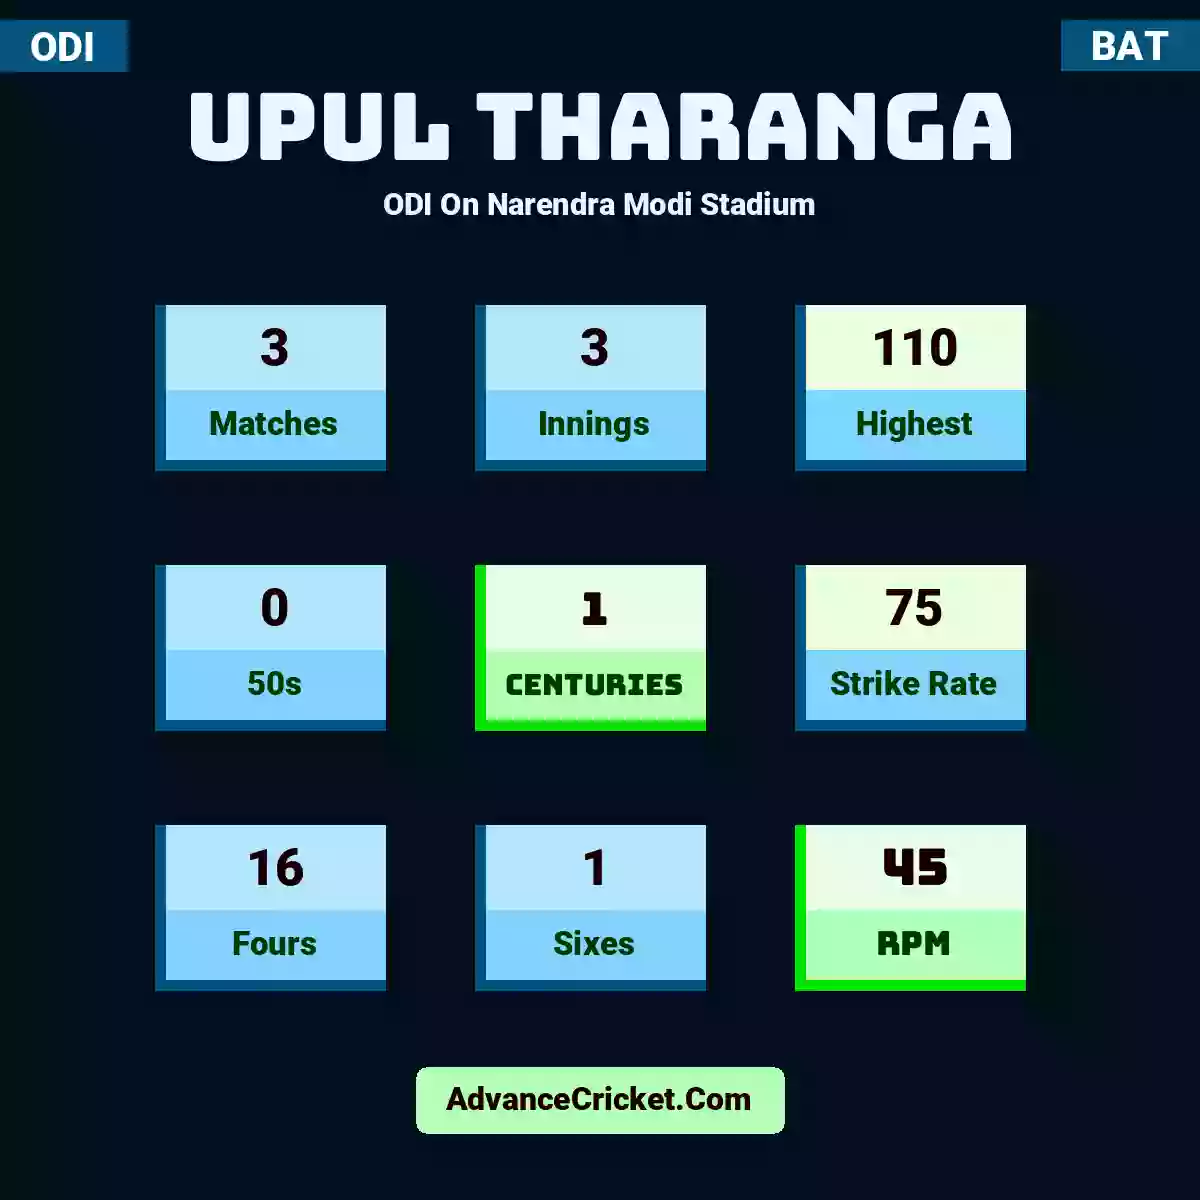 Upul Tharanga ODI  On Narendra Modi Stadium, Upul Tharanga played 3 matches, scored 110 runs as highest, 0 half-centuries, and 1 centuries, with a strike rate of 75. U.Tharanga hit 16 fours and 1 sixes, with an RPM of 45.